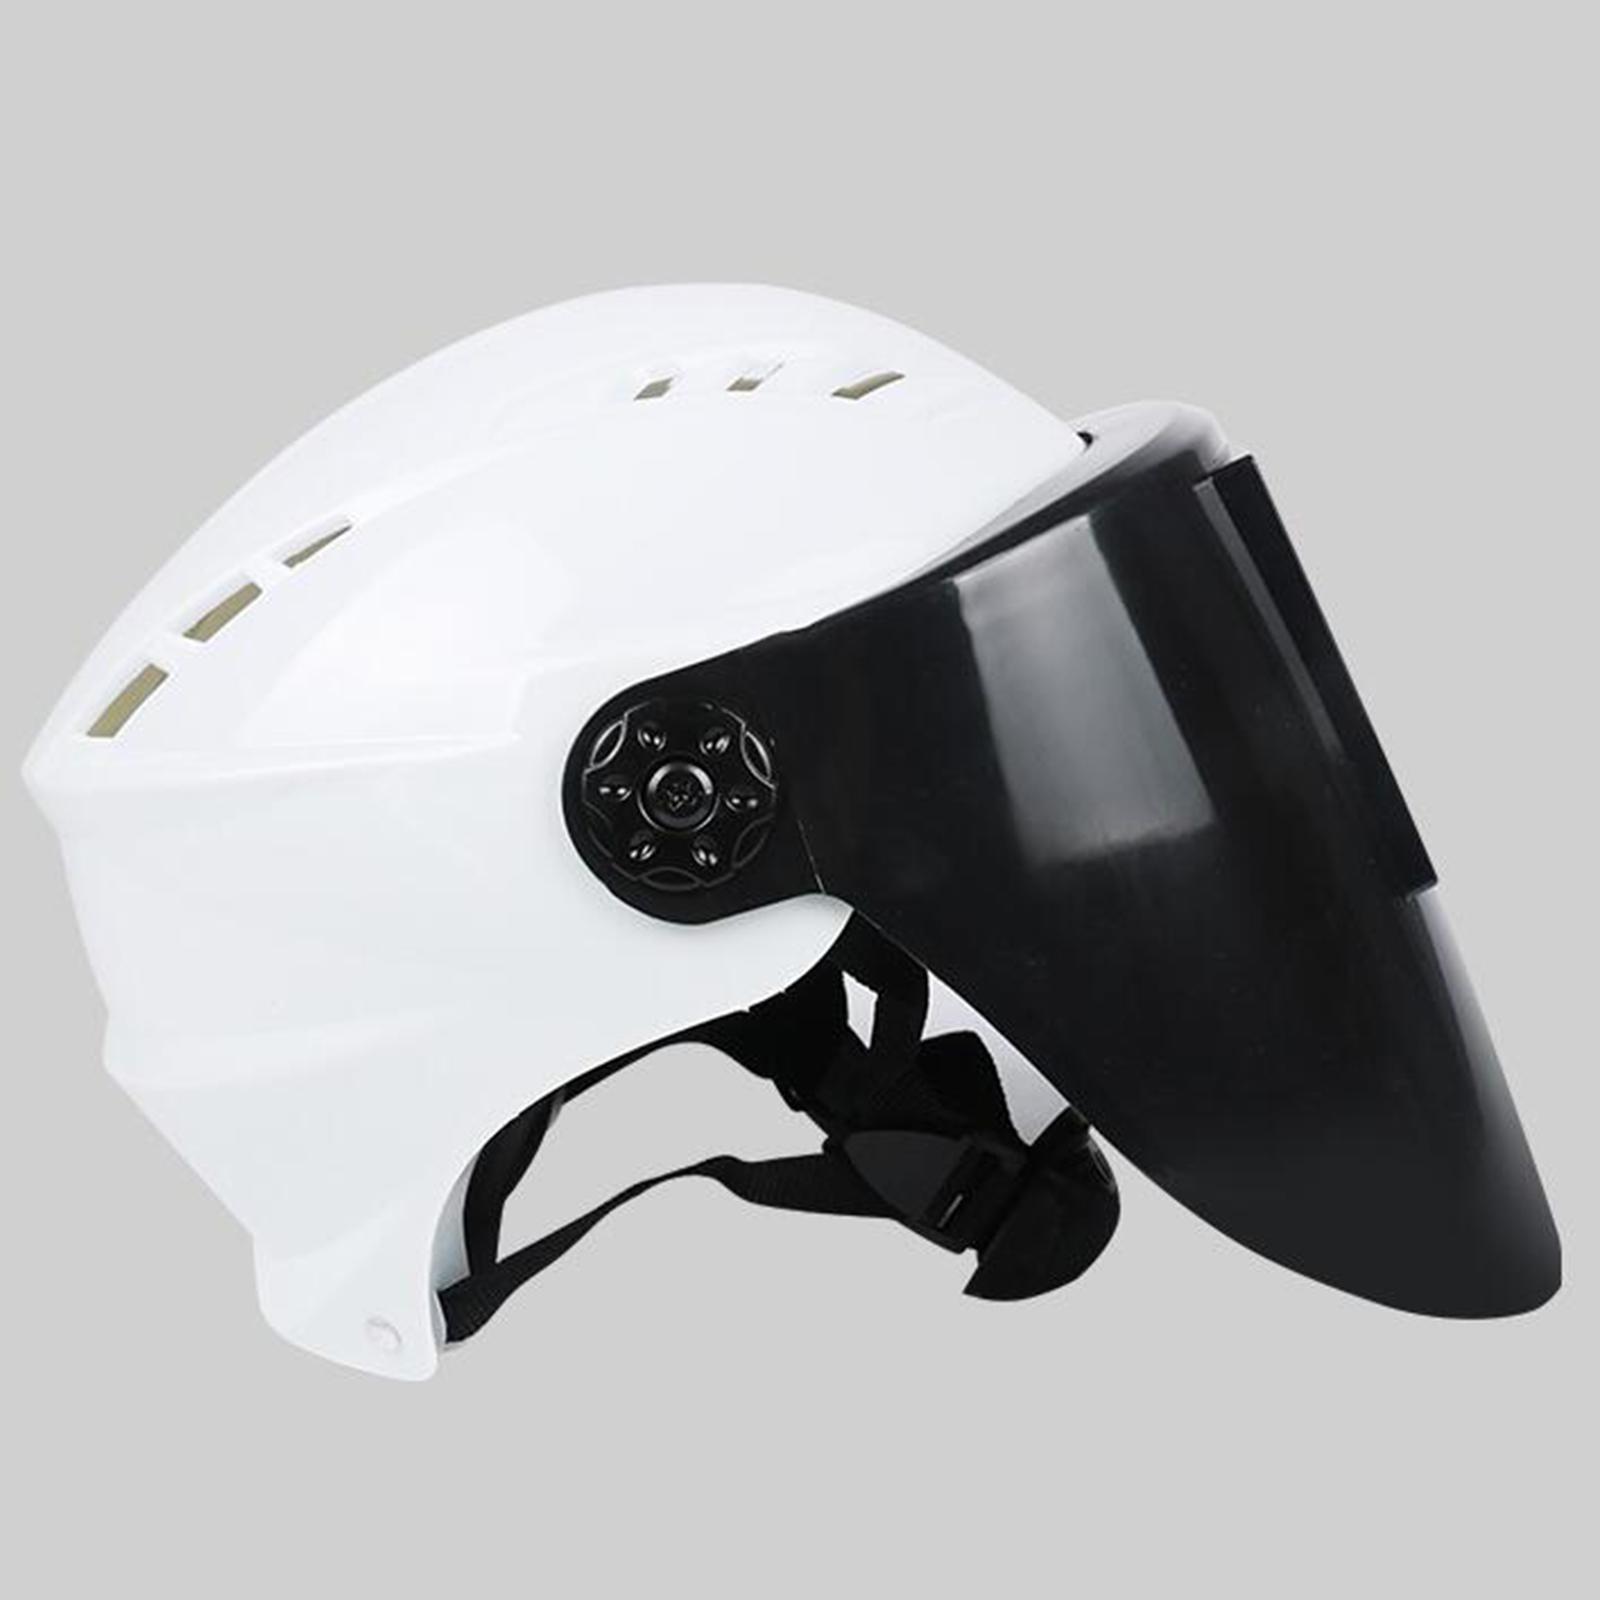 Solar Auto Darkening Welding Helmet Adjustable Hood Mask for TIG MIG ARC Weld Work Safety Headgear